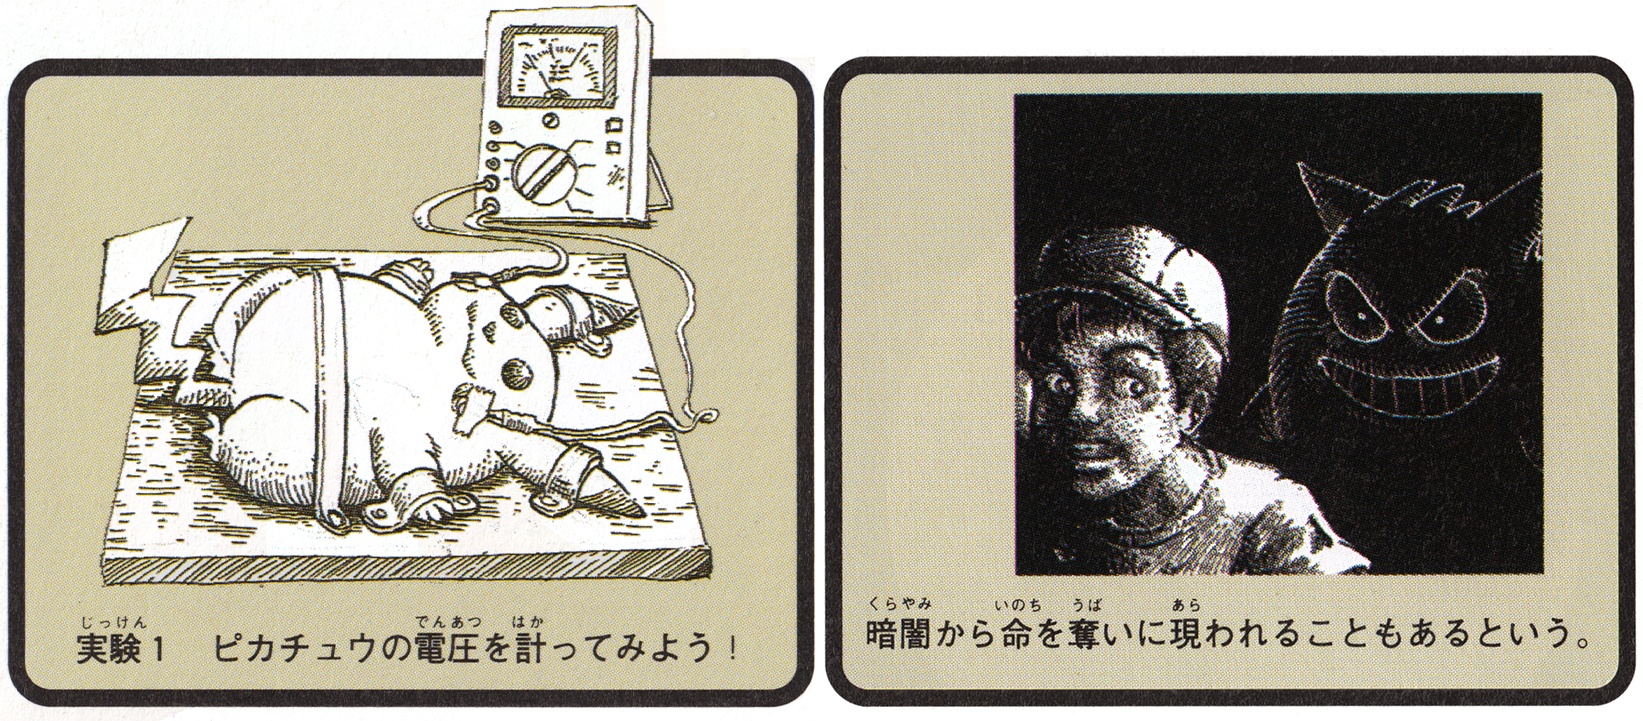 Pokemon Encyclopedia 2 Game Guide & Art Book Japan Vintage Rare Used 1997 